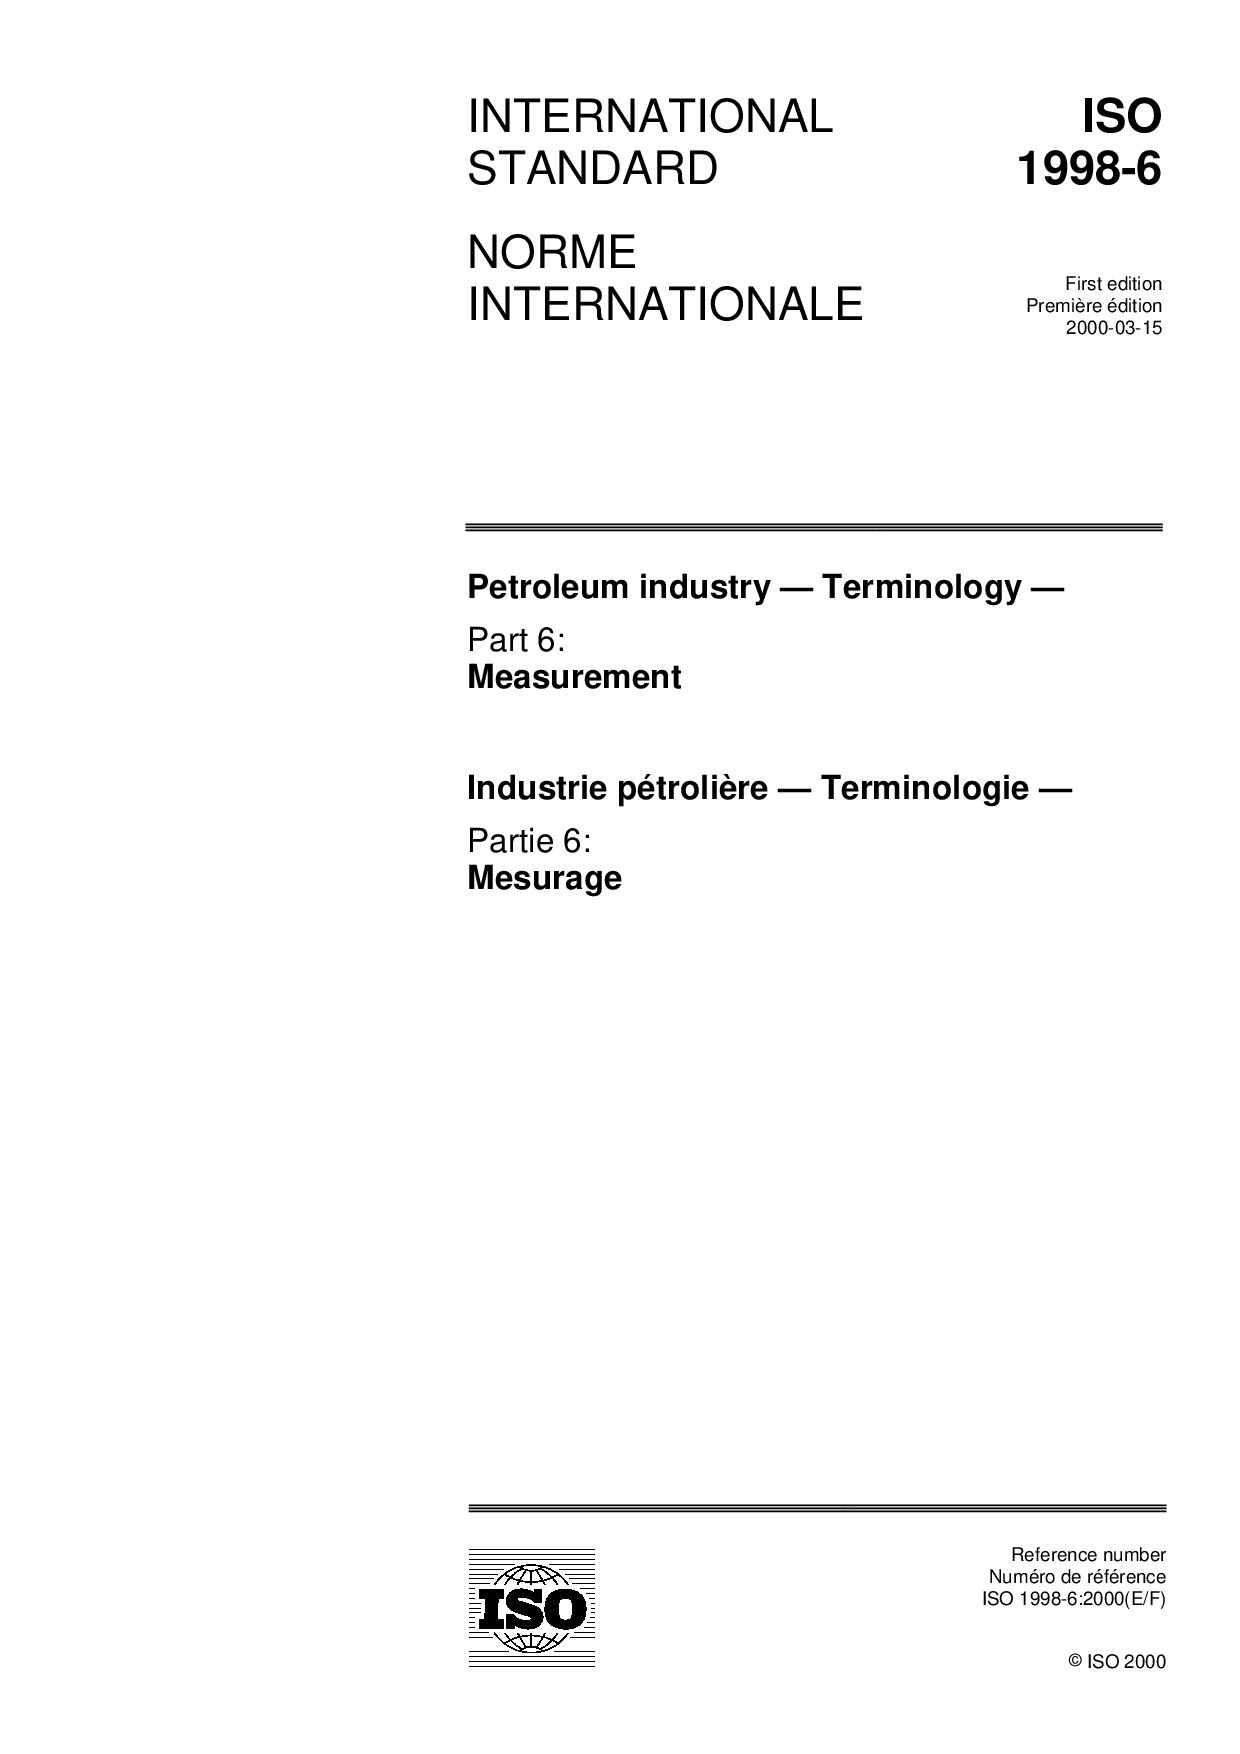 ISO 1998-6:2000封面图